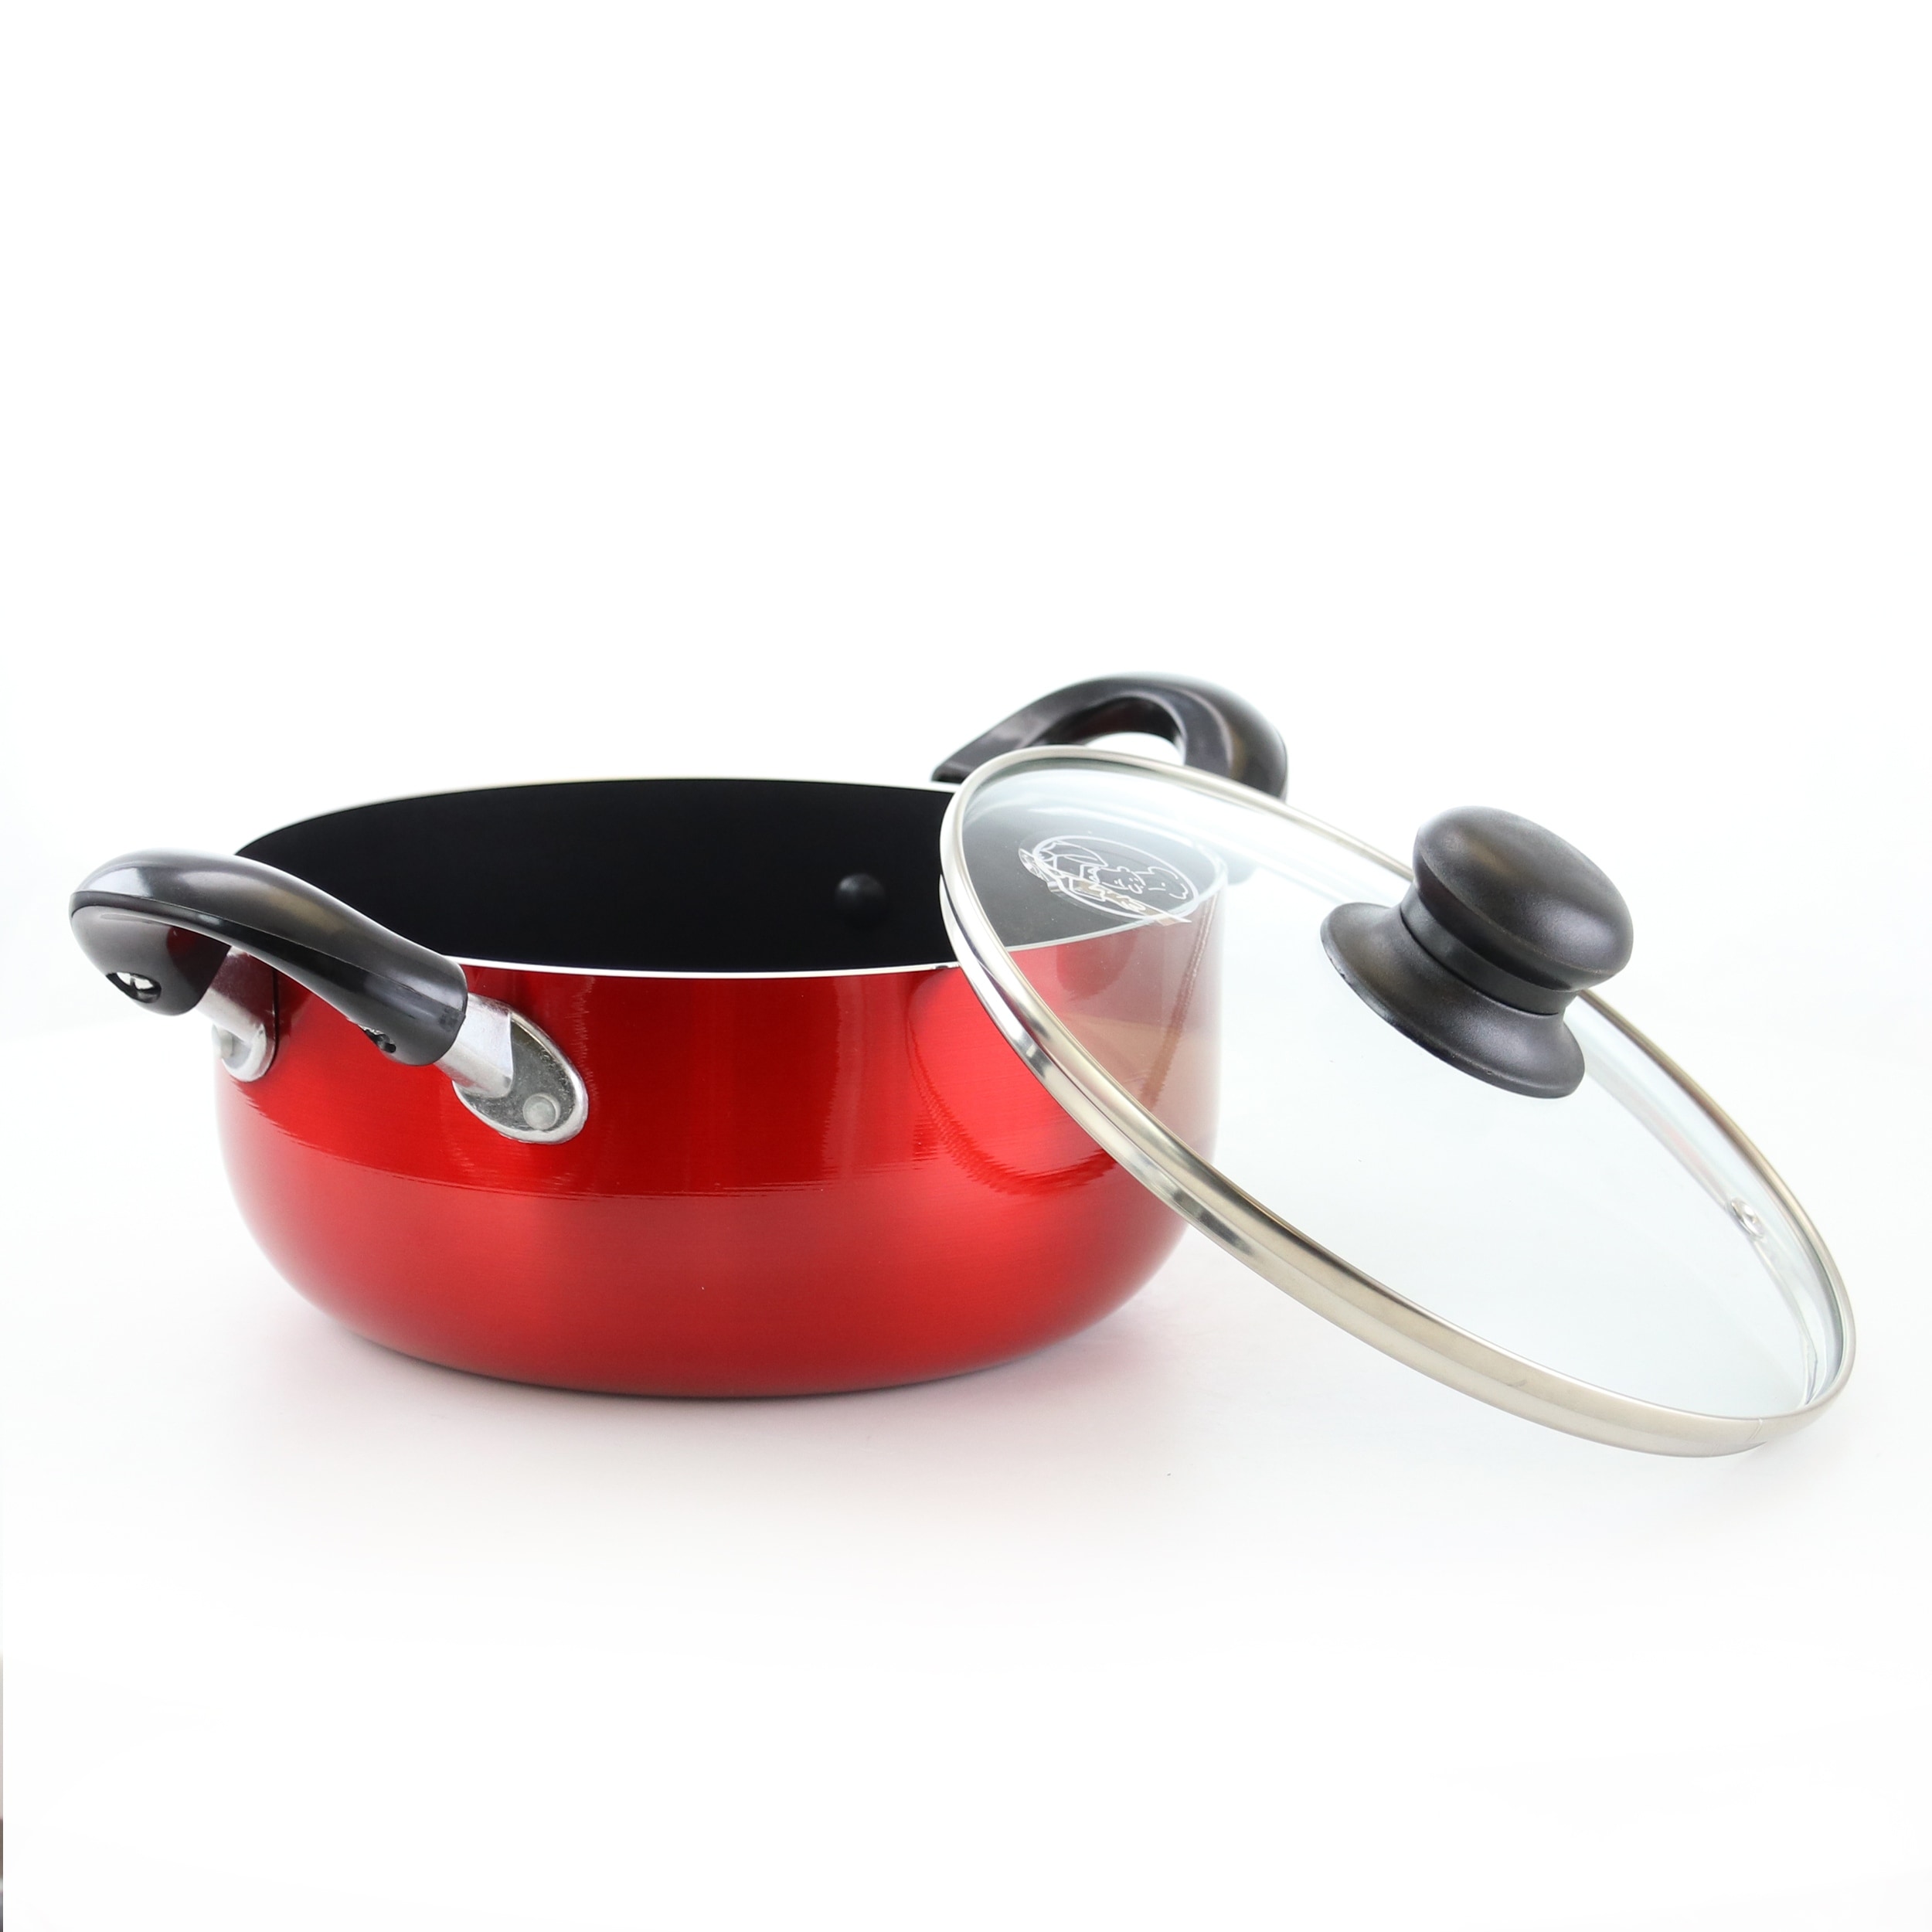  Bialetti Oval Aluminum 5.5 Quart Pasta Pot with Strainer Lid,  Nonstick, Red, 5.5 Quarts : Home & Kitchen